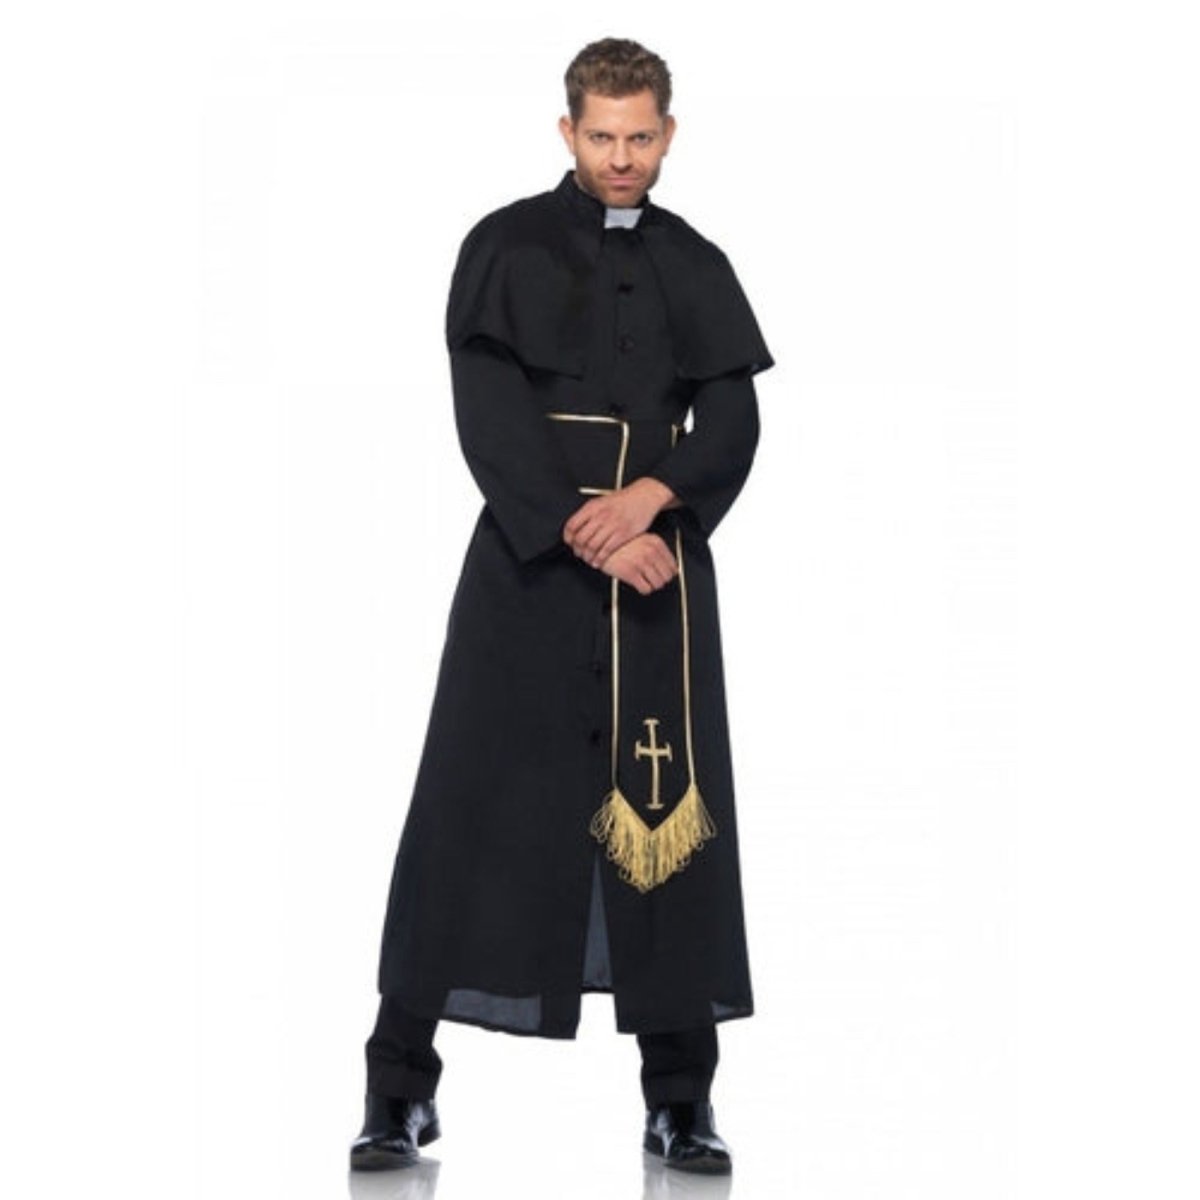 Men's Priest Costume - worldclasscostumes